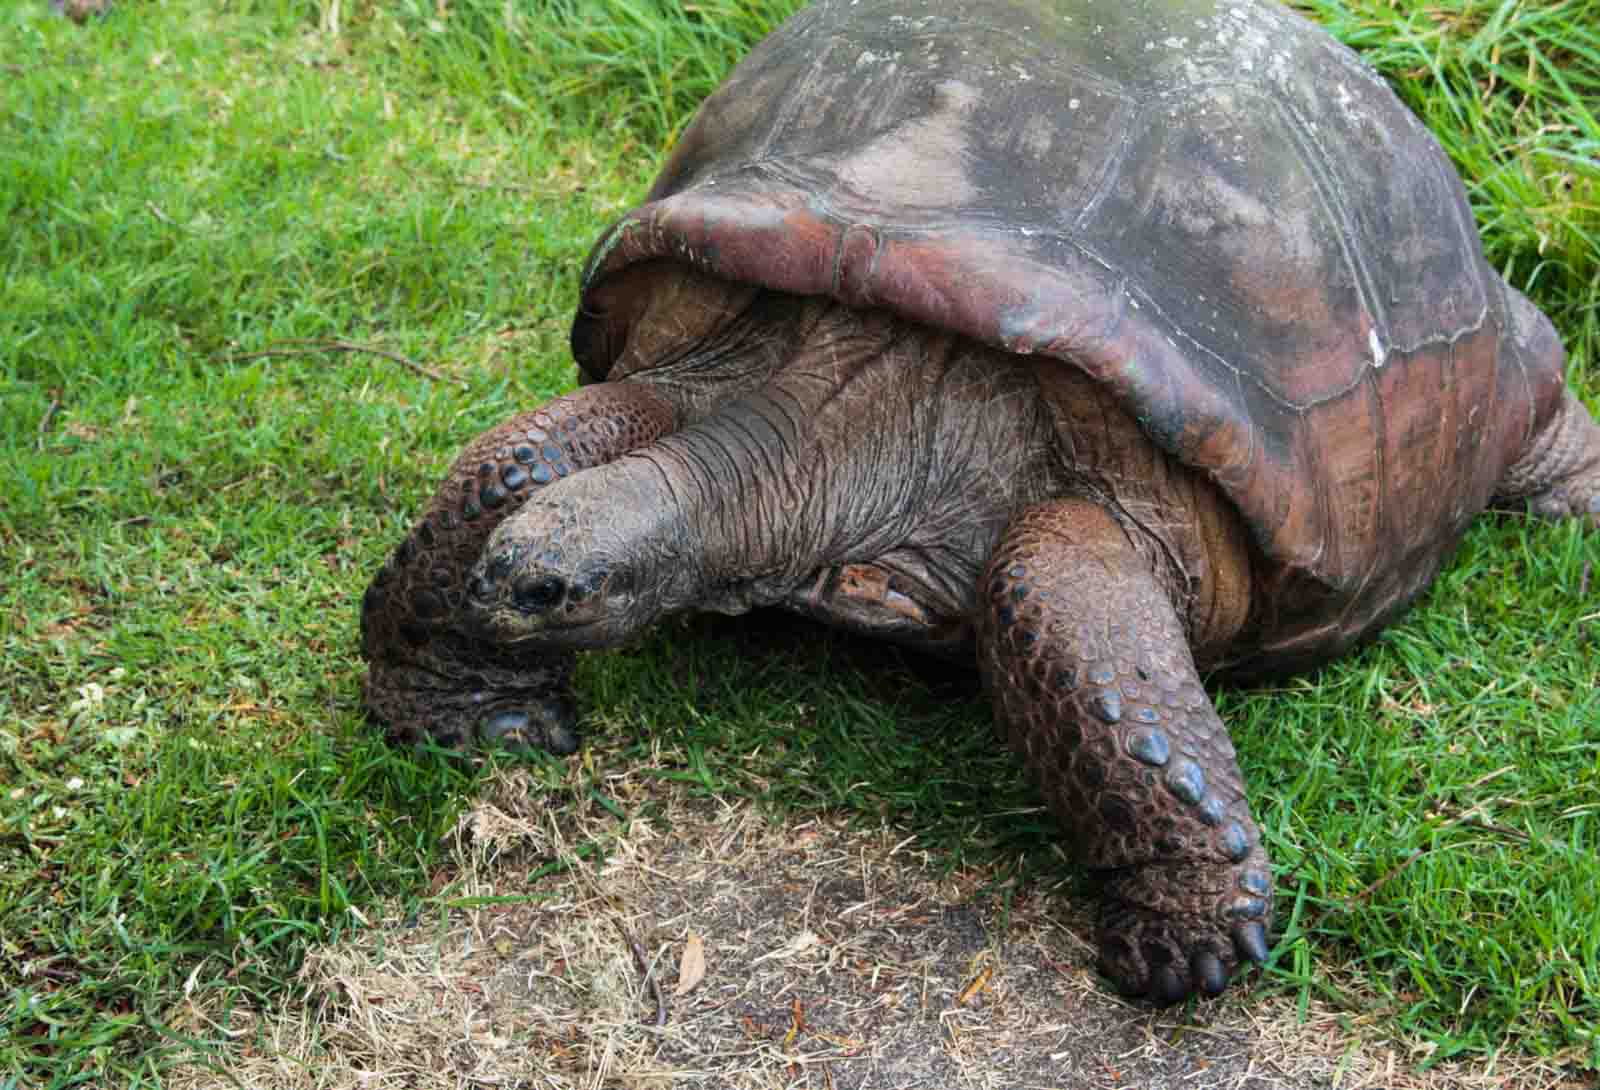 Jonathan the Tortoise: World’s oldest living land animal celebrates 191st birthday 